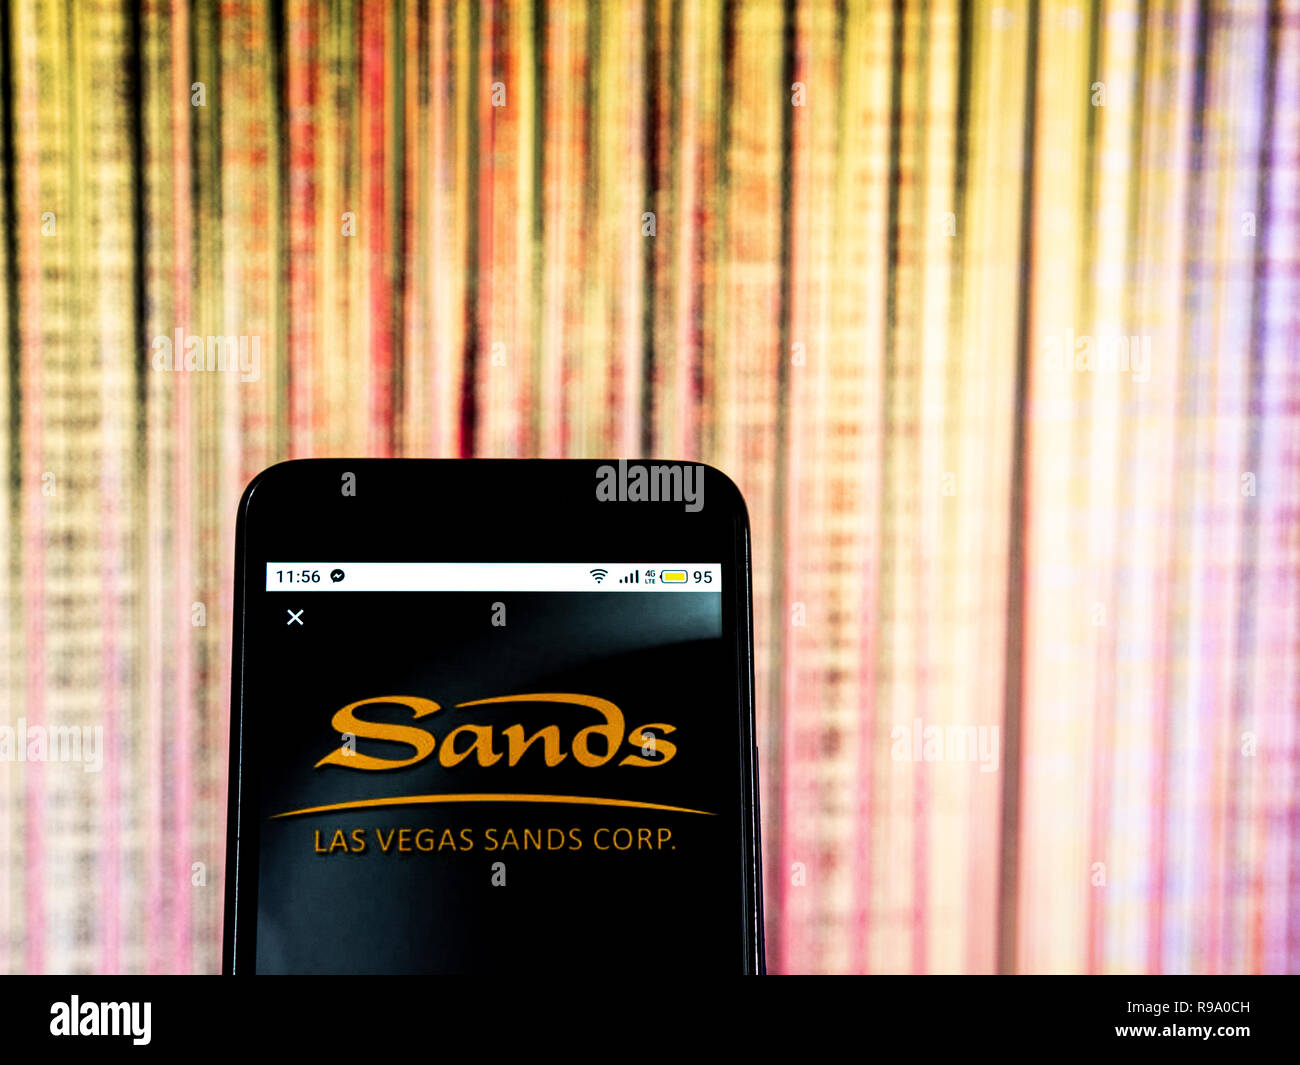 Las Vegas Sands Casino hotel company logo seen displayed on smart phone  Stock Photo - Alamy